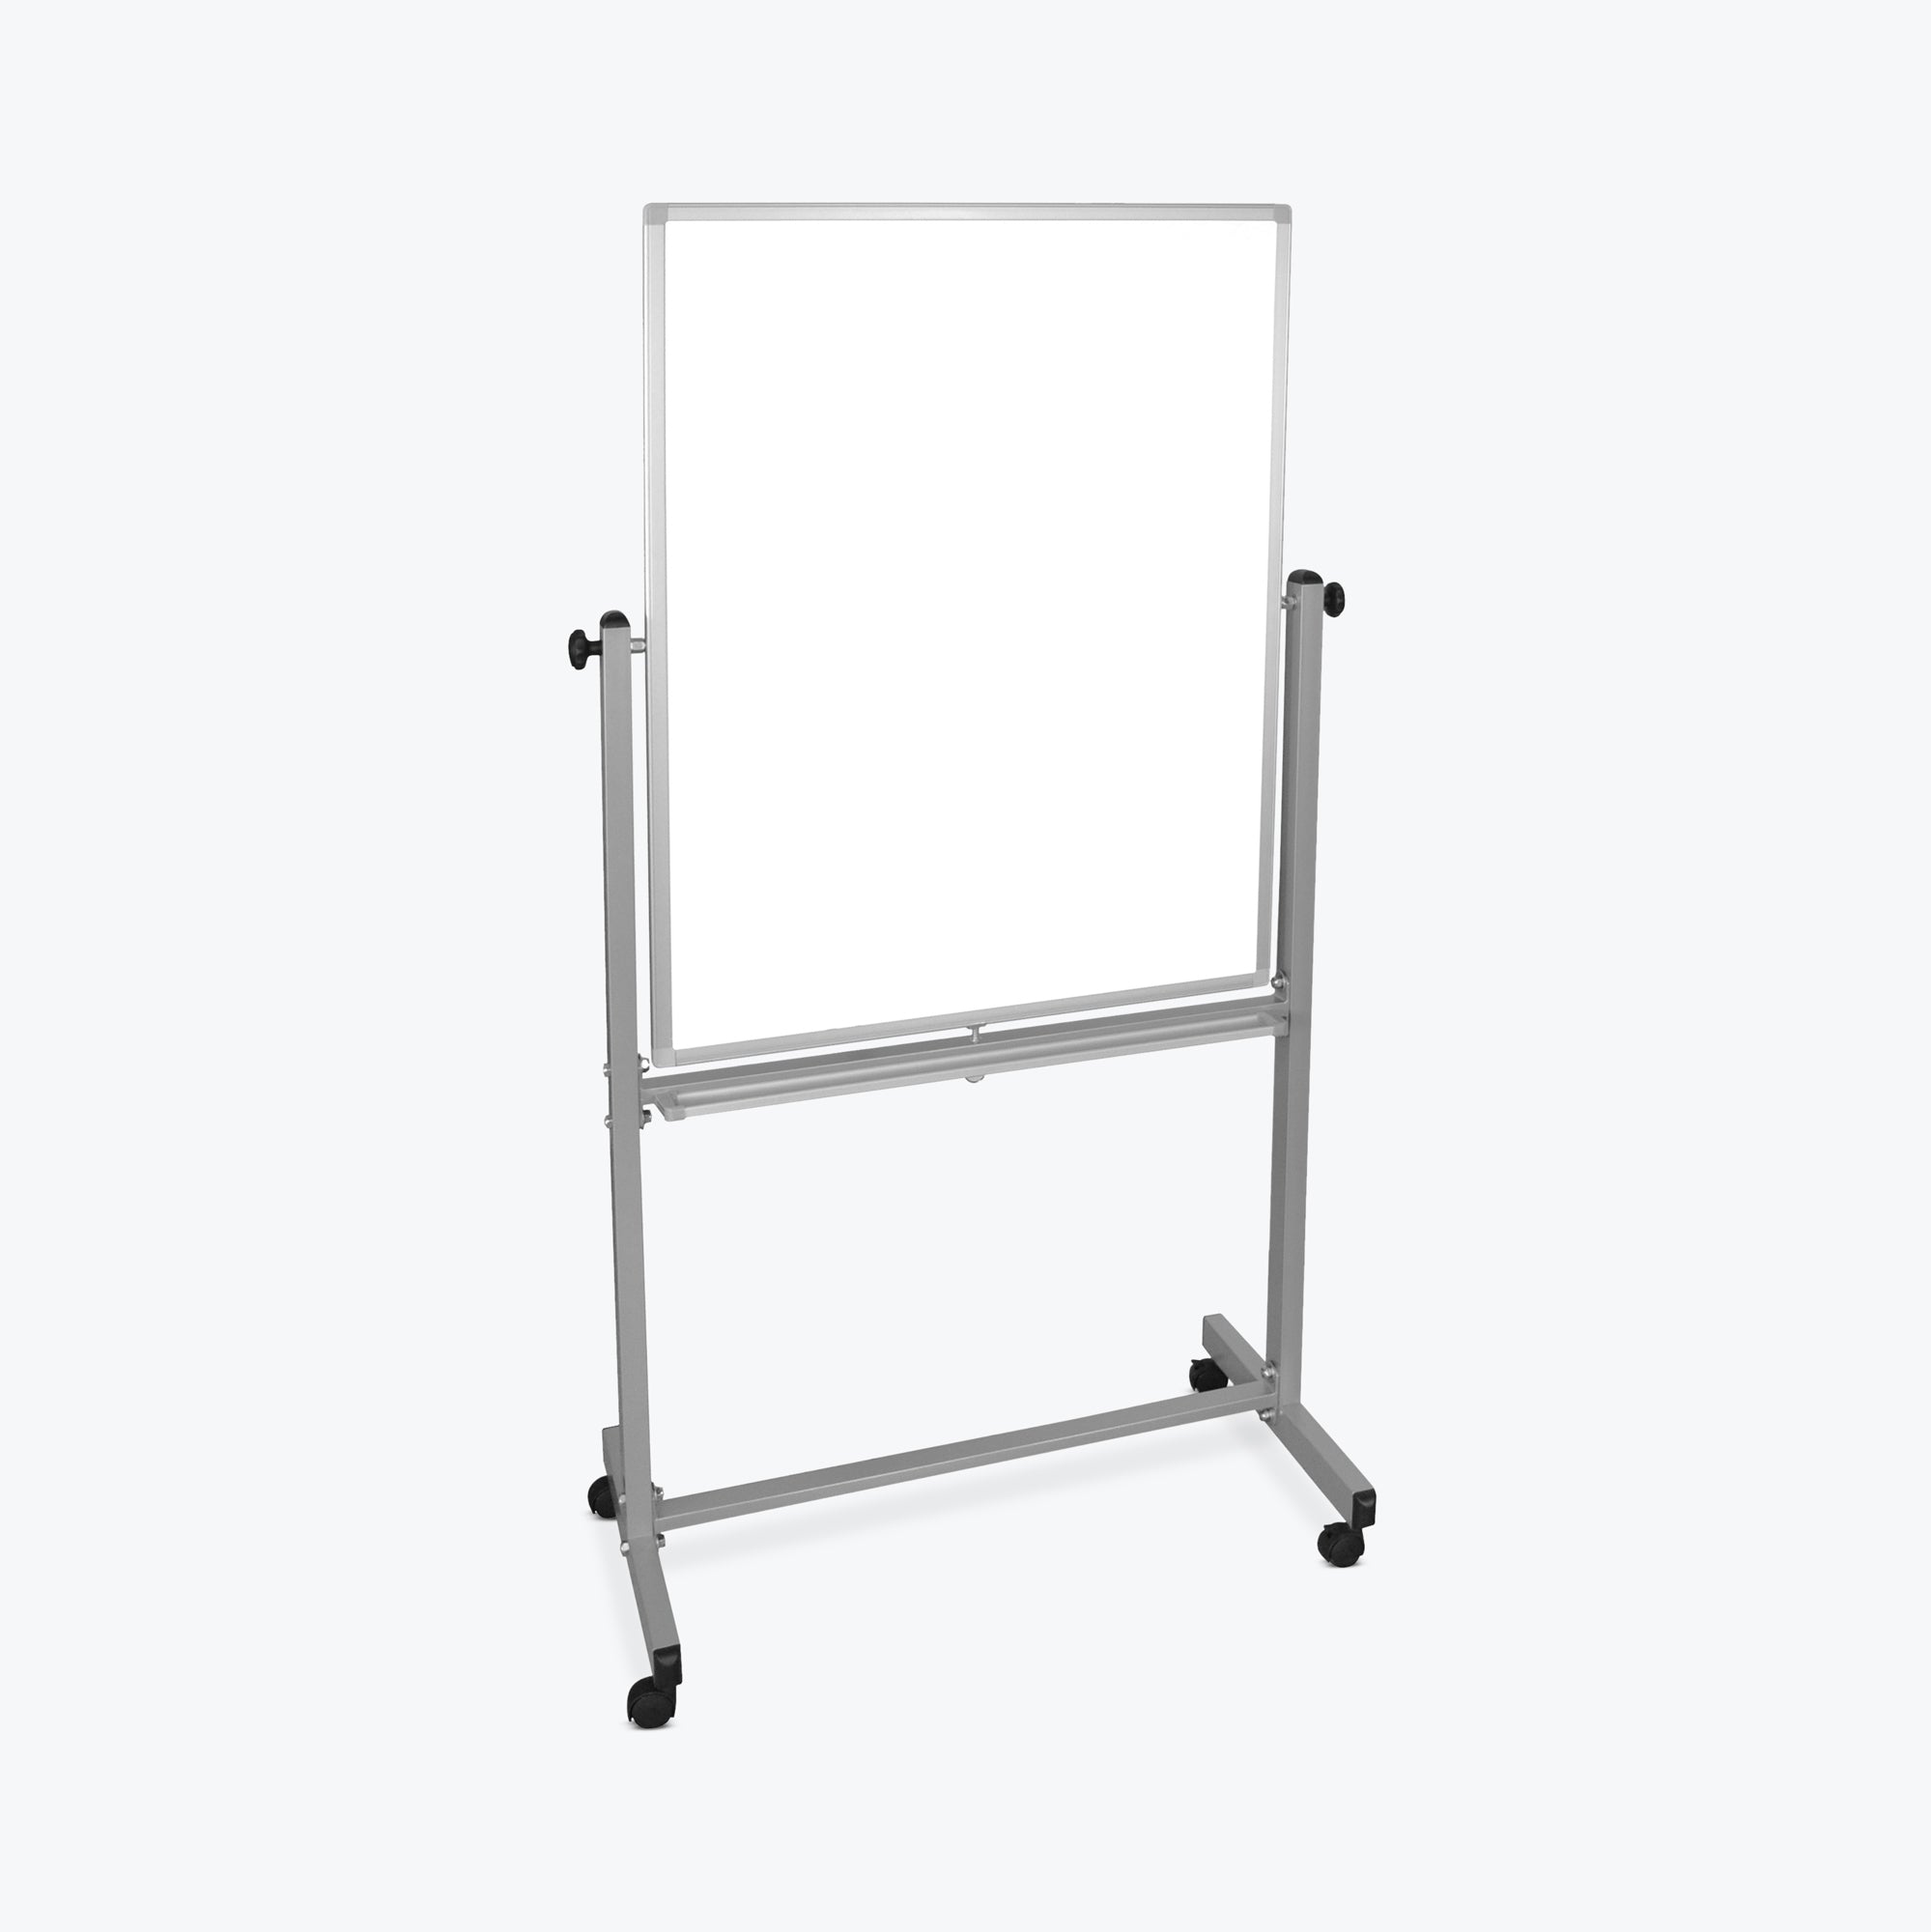 Luxor 30" x 40" Reversible Magnetic Whiteboard 36"W x 20.5"D x 68"H (Silver/White) - MB3040WW